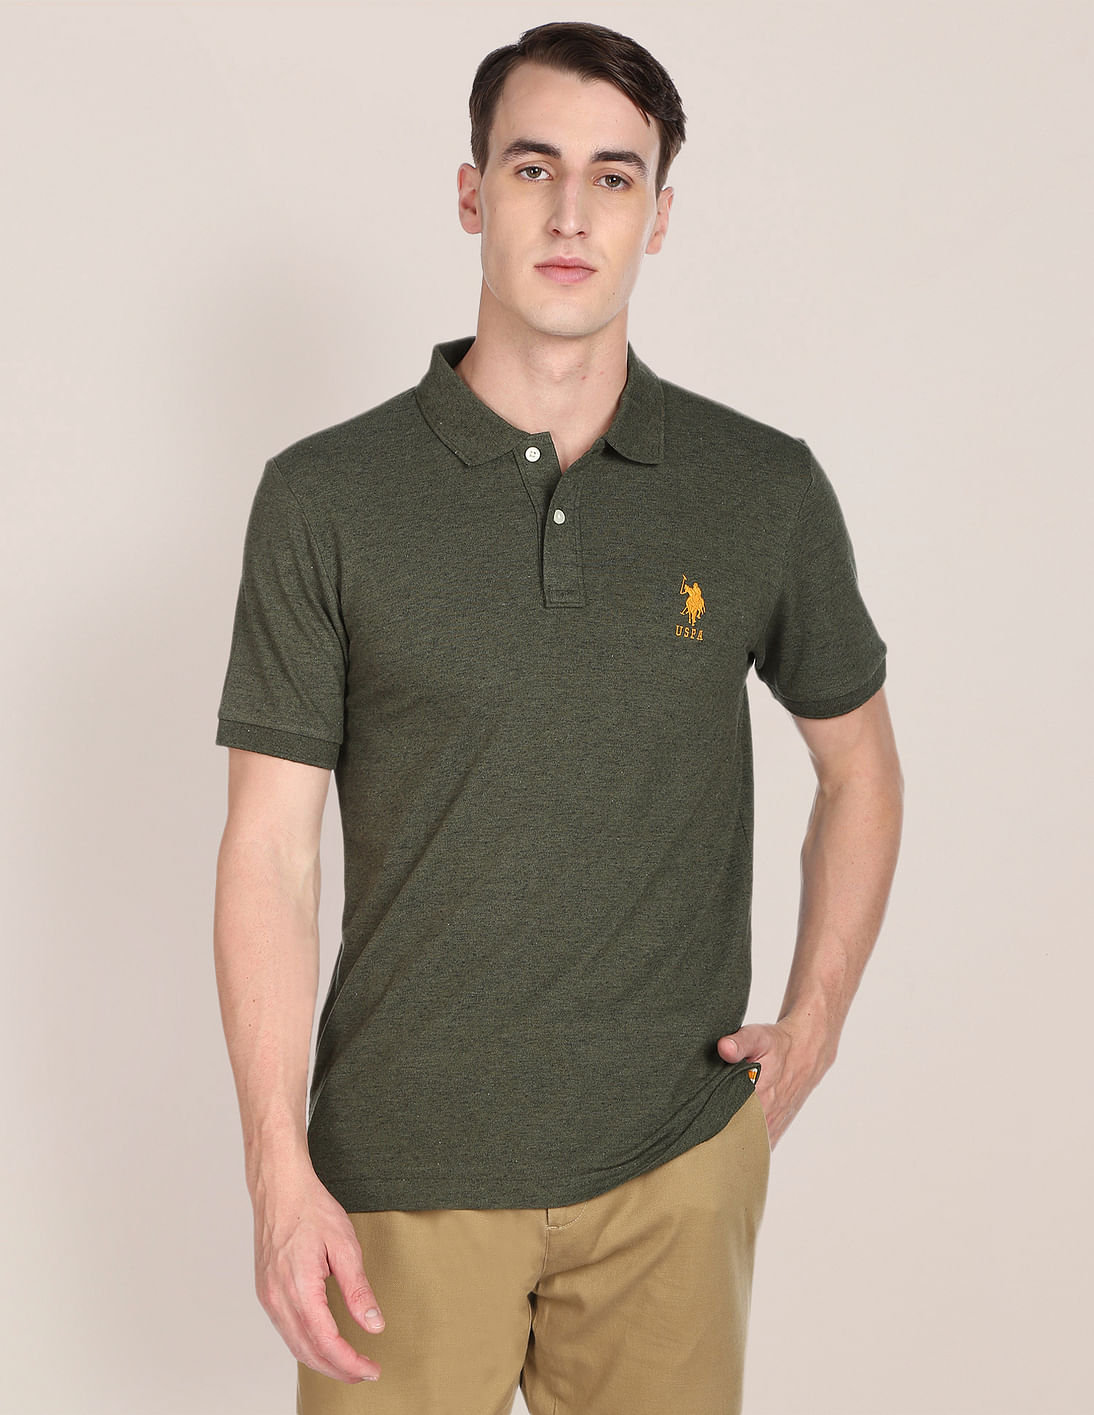 U.S. Polo Assn. Mens Burnt Olive Cotton Long Sleeve Polo Shirt - Green